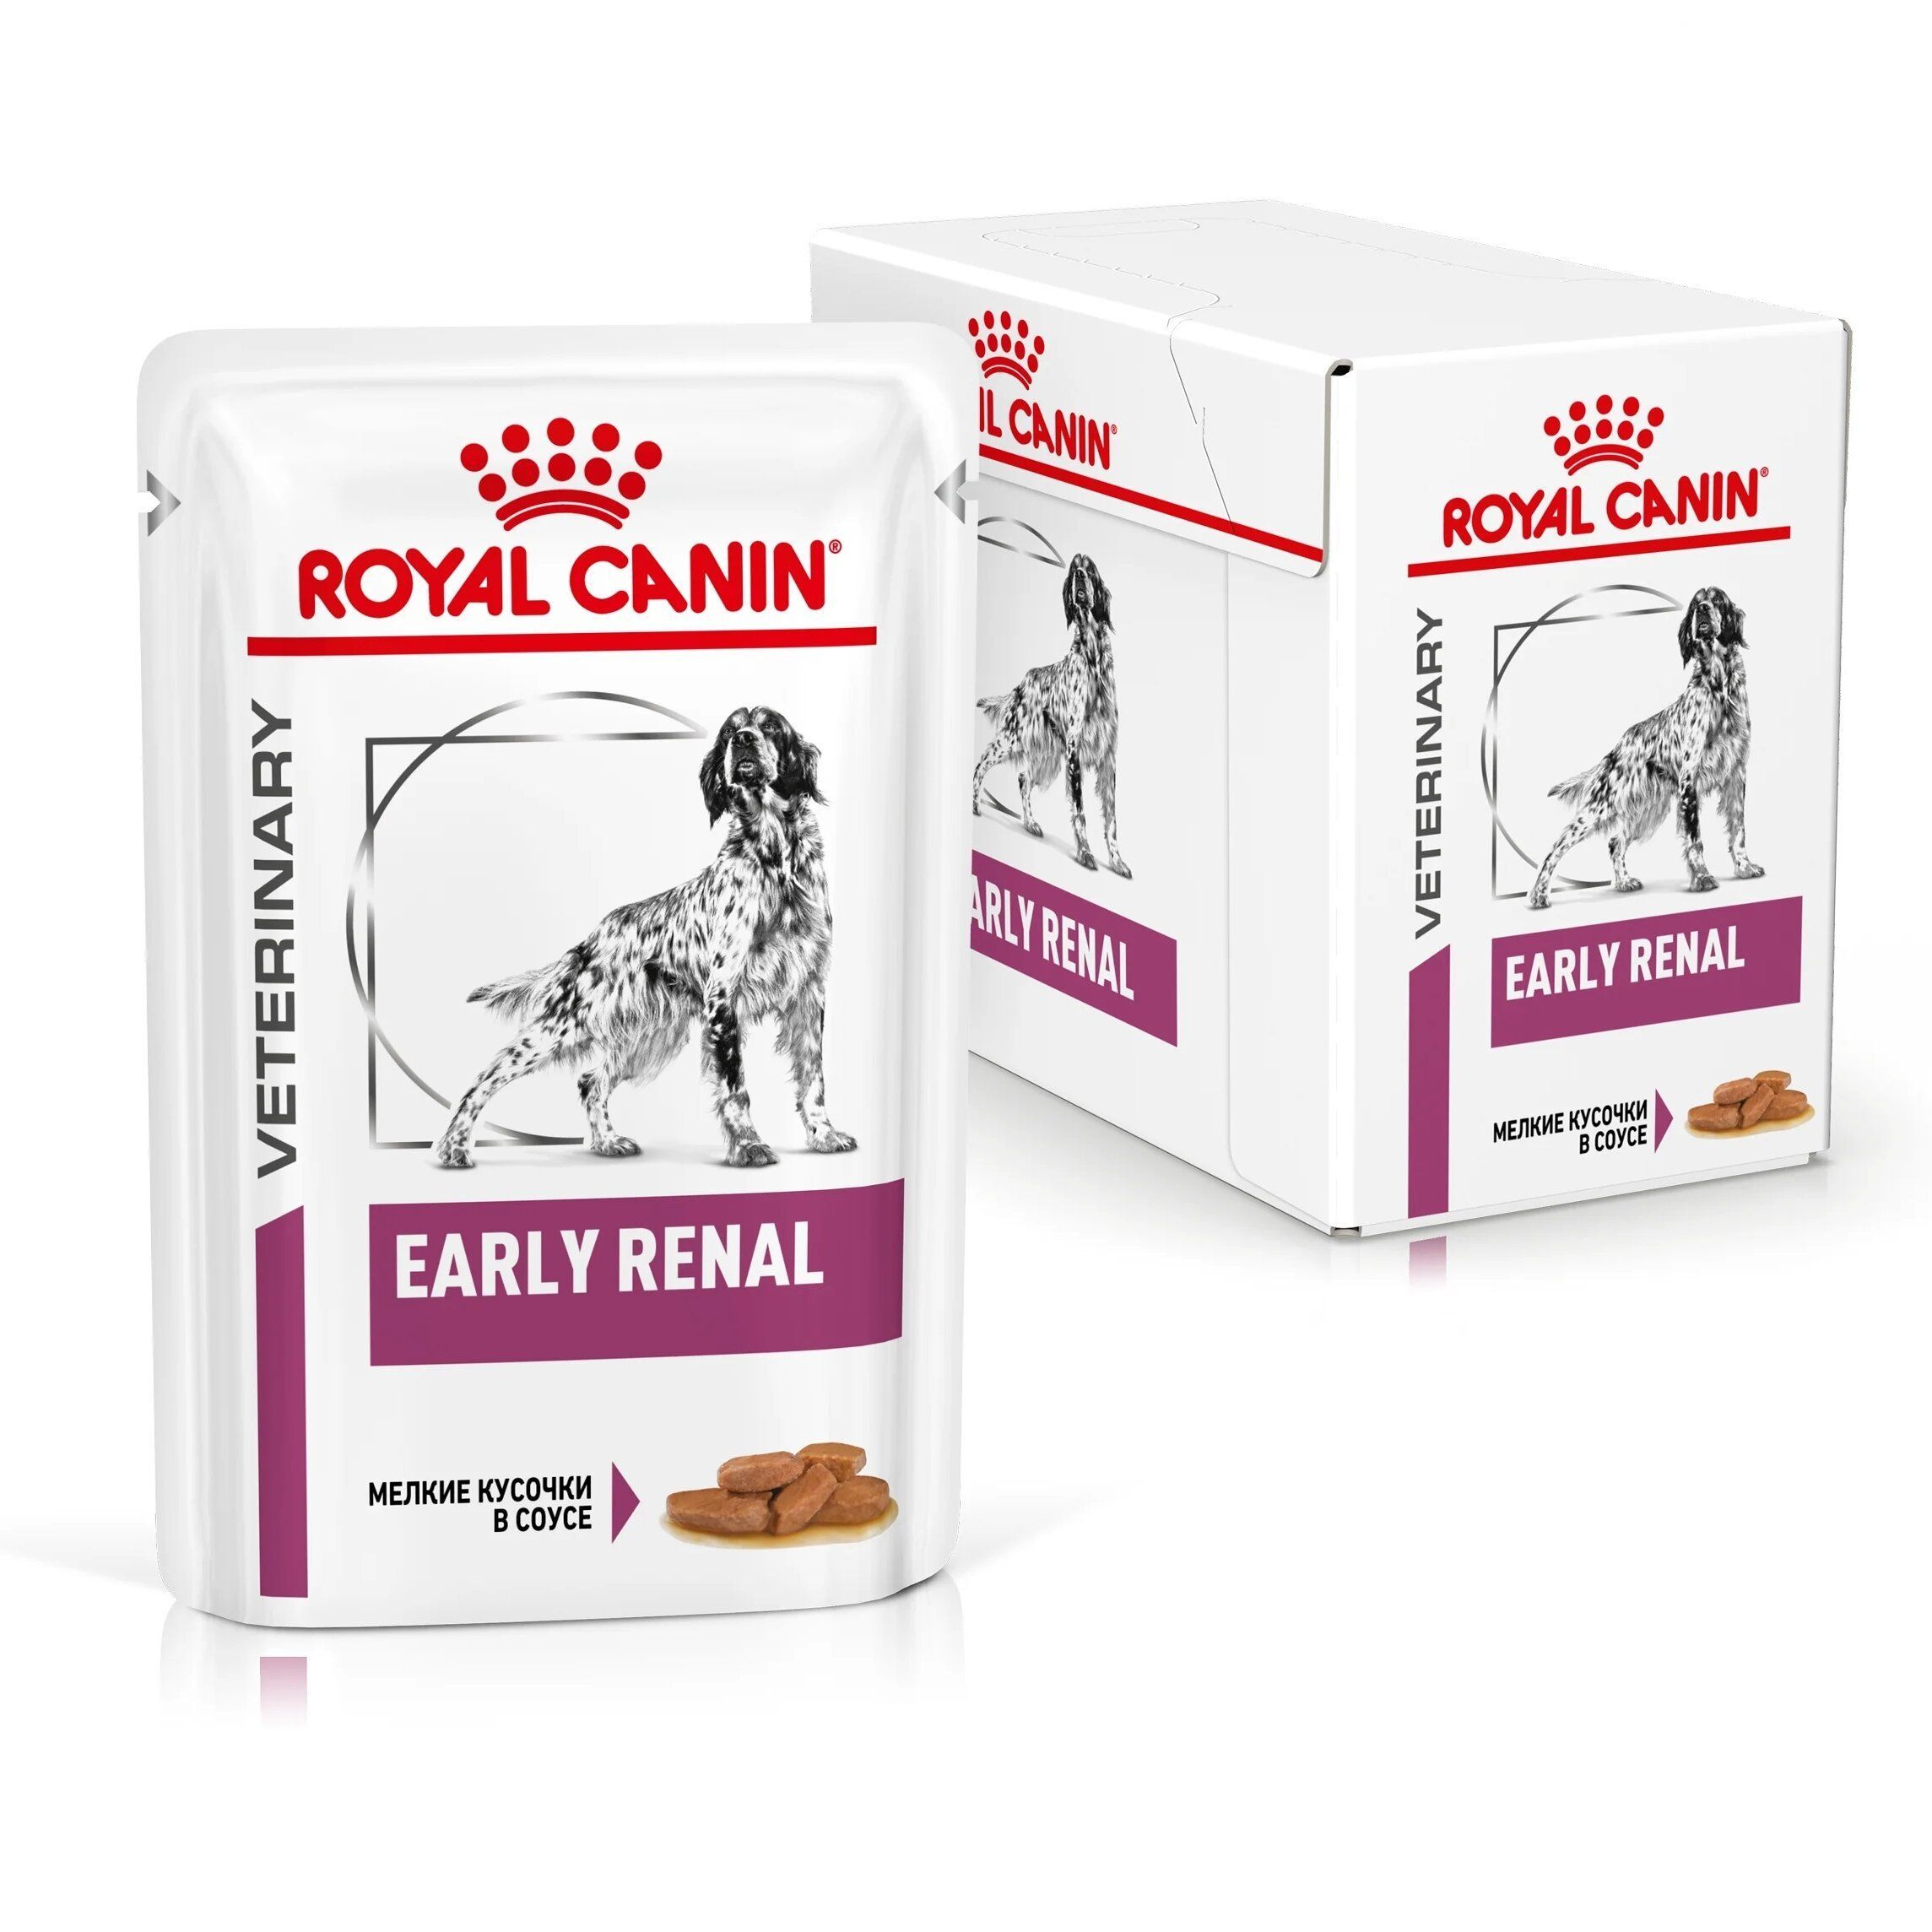 Royal canin кусочки в соусе. Роял Канин Ренал Эрли. Сухой корм для собак Royal Canin early renal для кошек. Роял Канин Neutered для собак. Роял Канин early renal для собак.